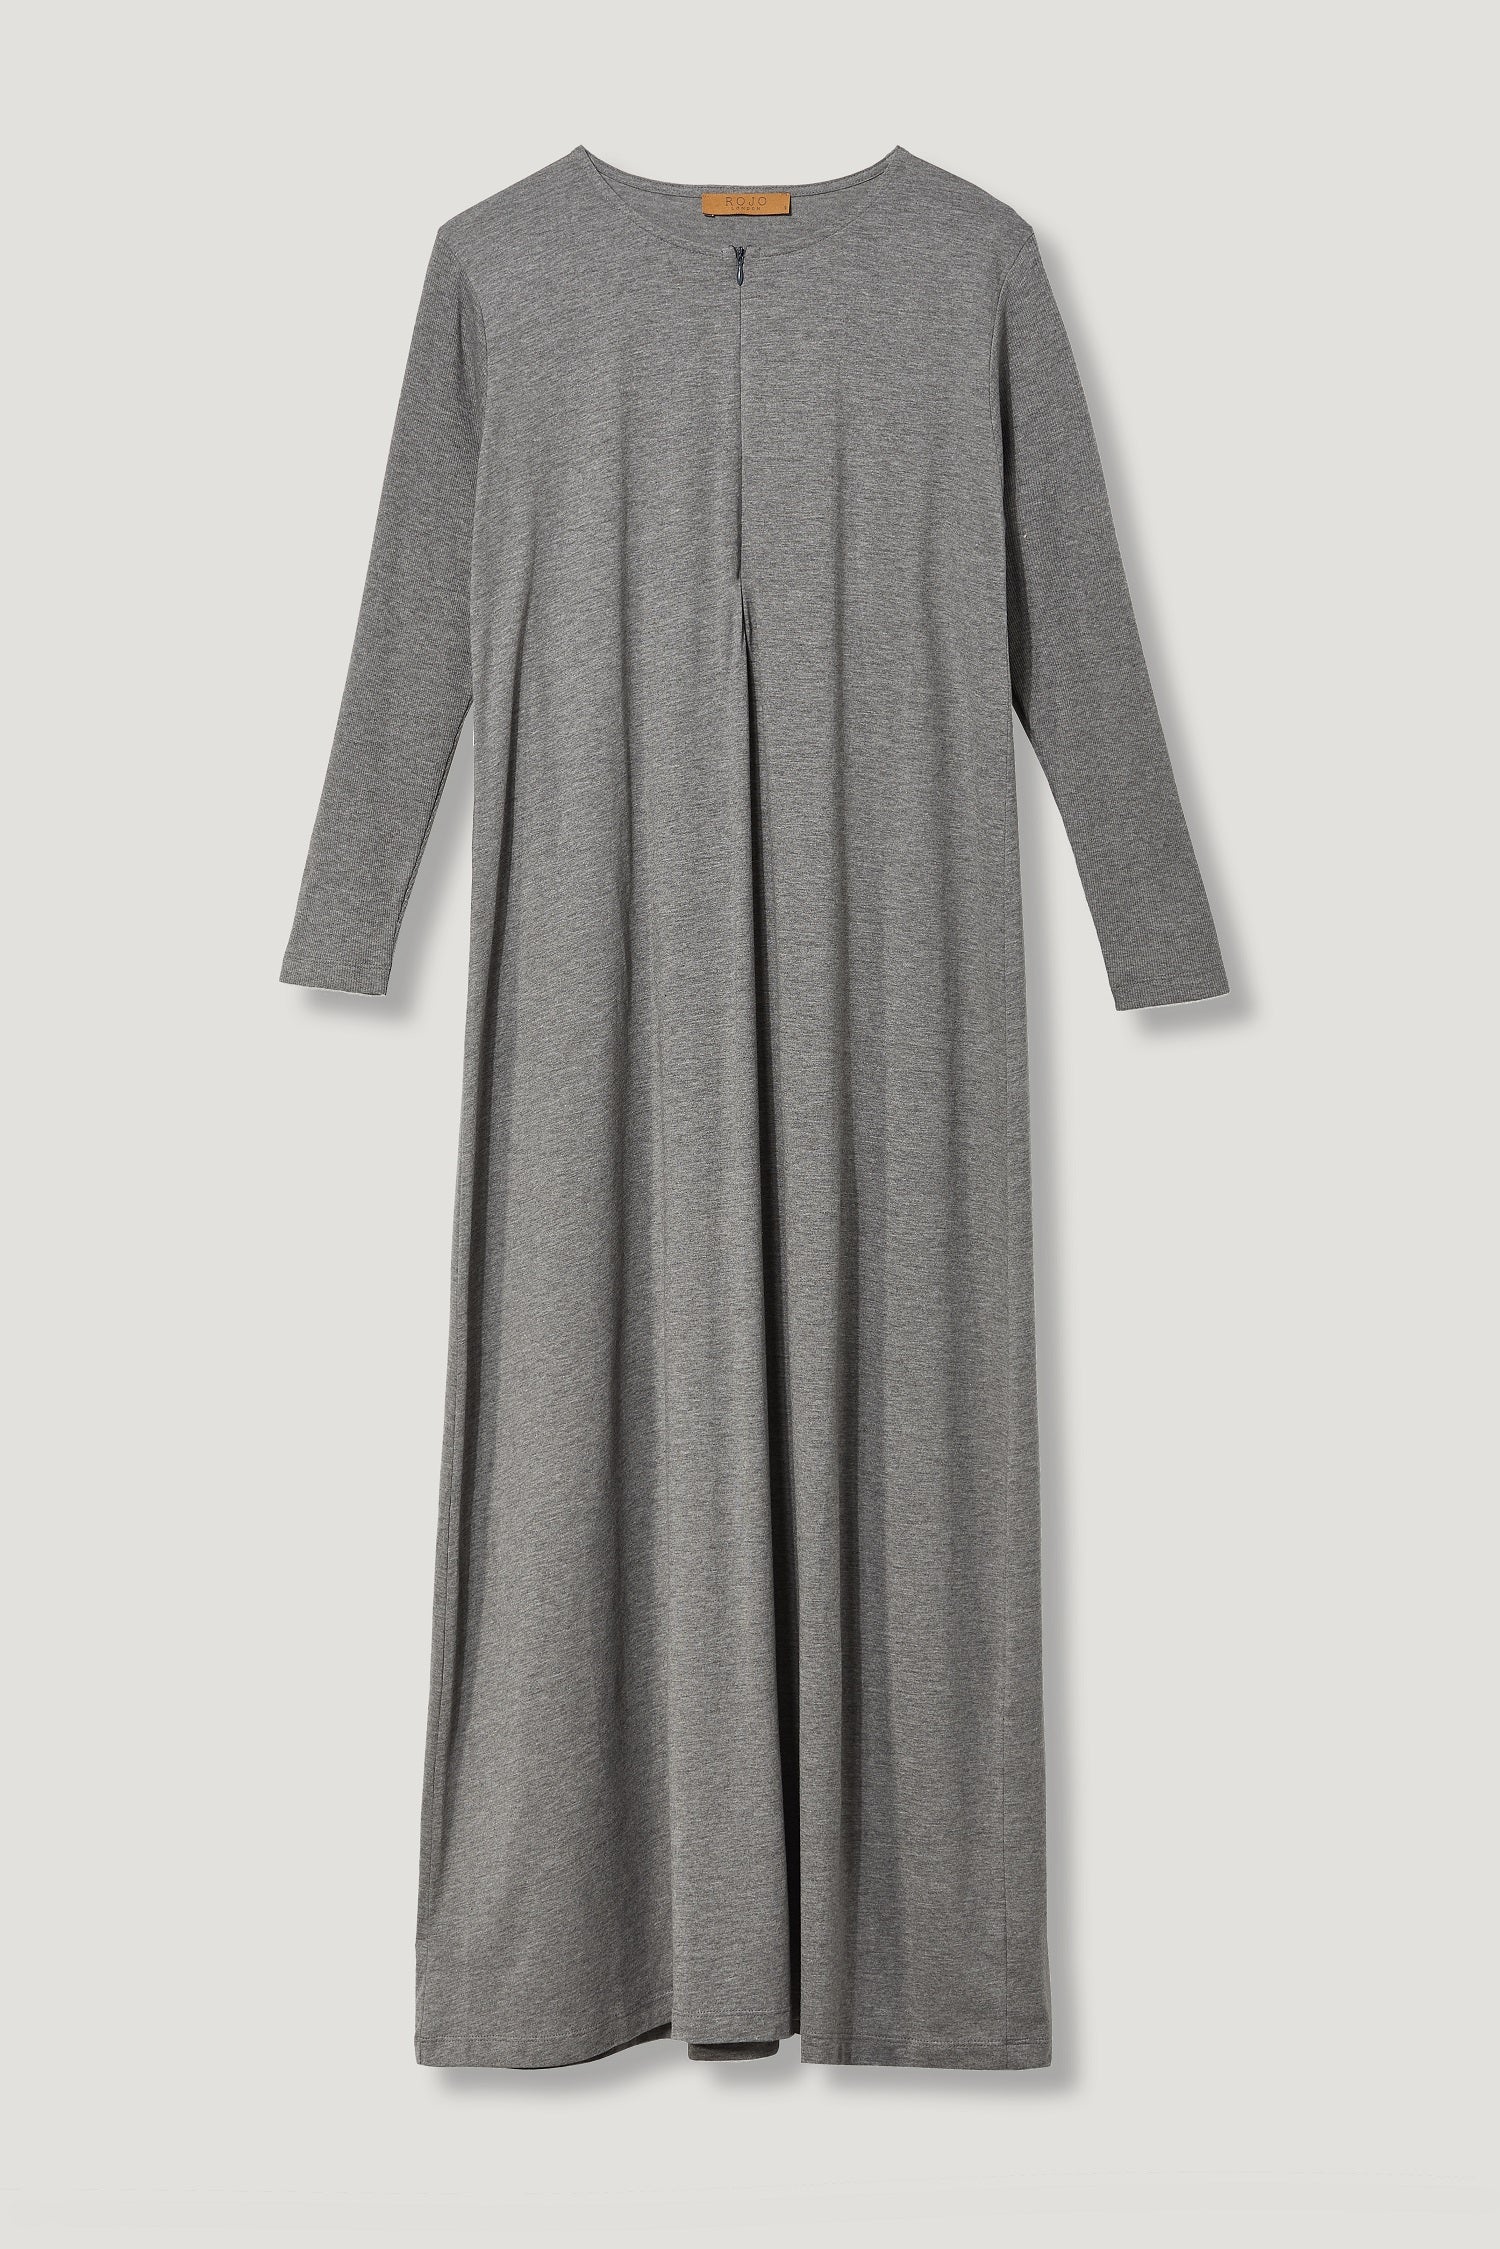 Minimalist Long Grey Nightgown & Lounge Hoodie